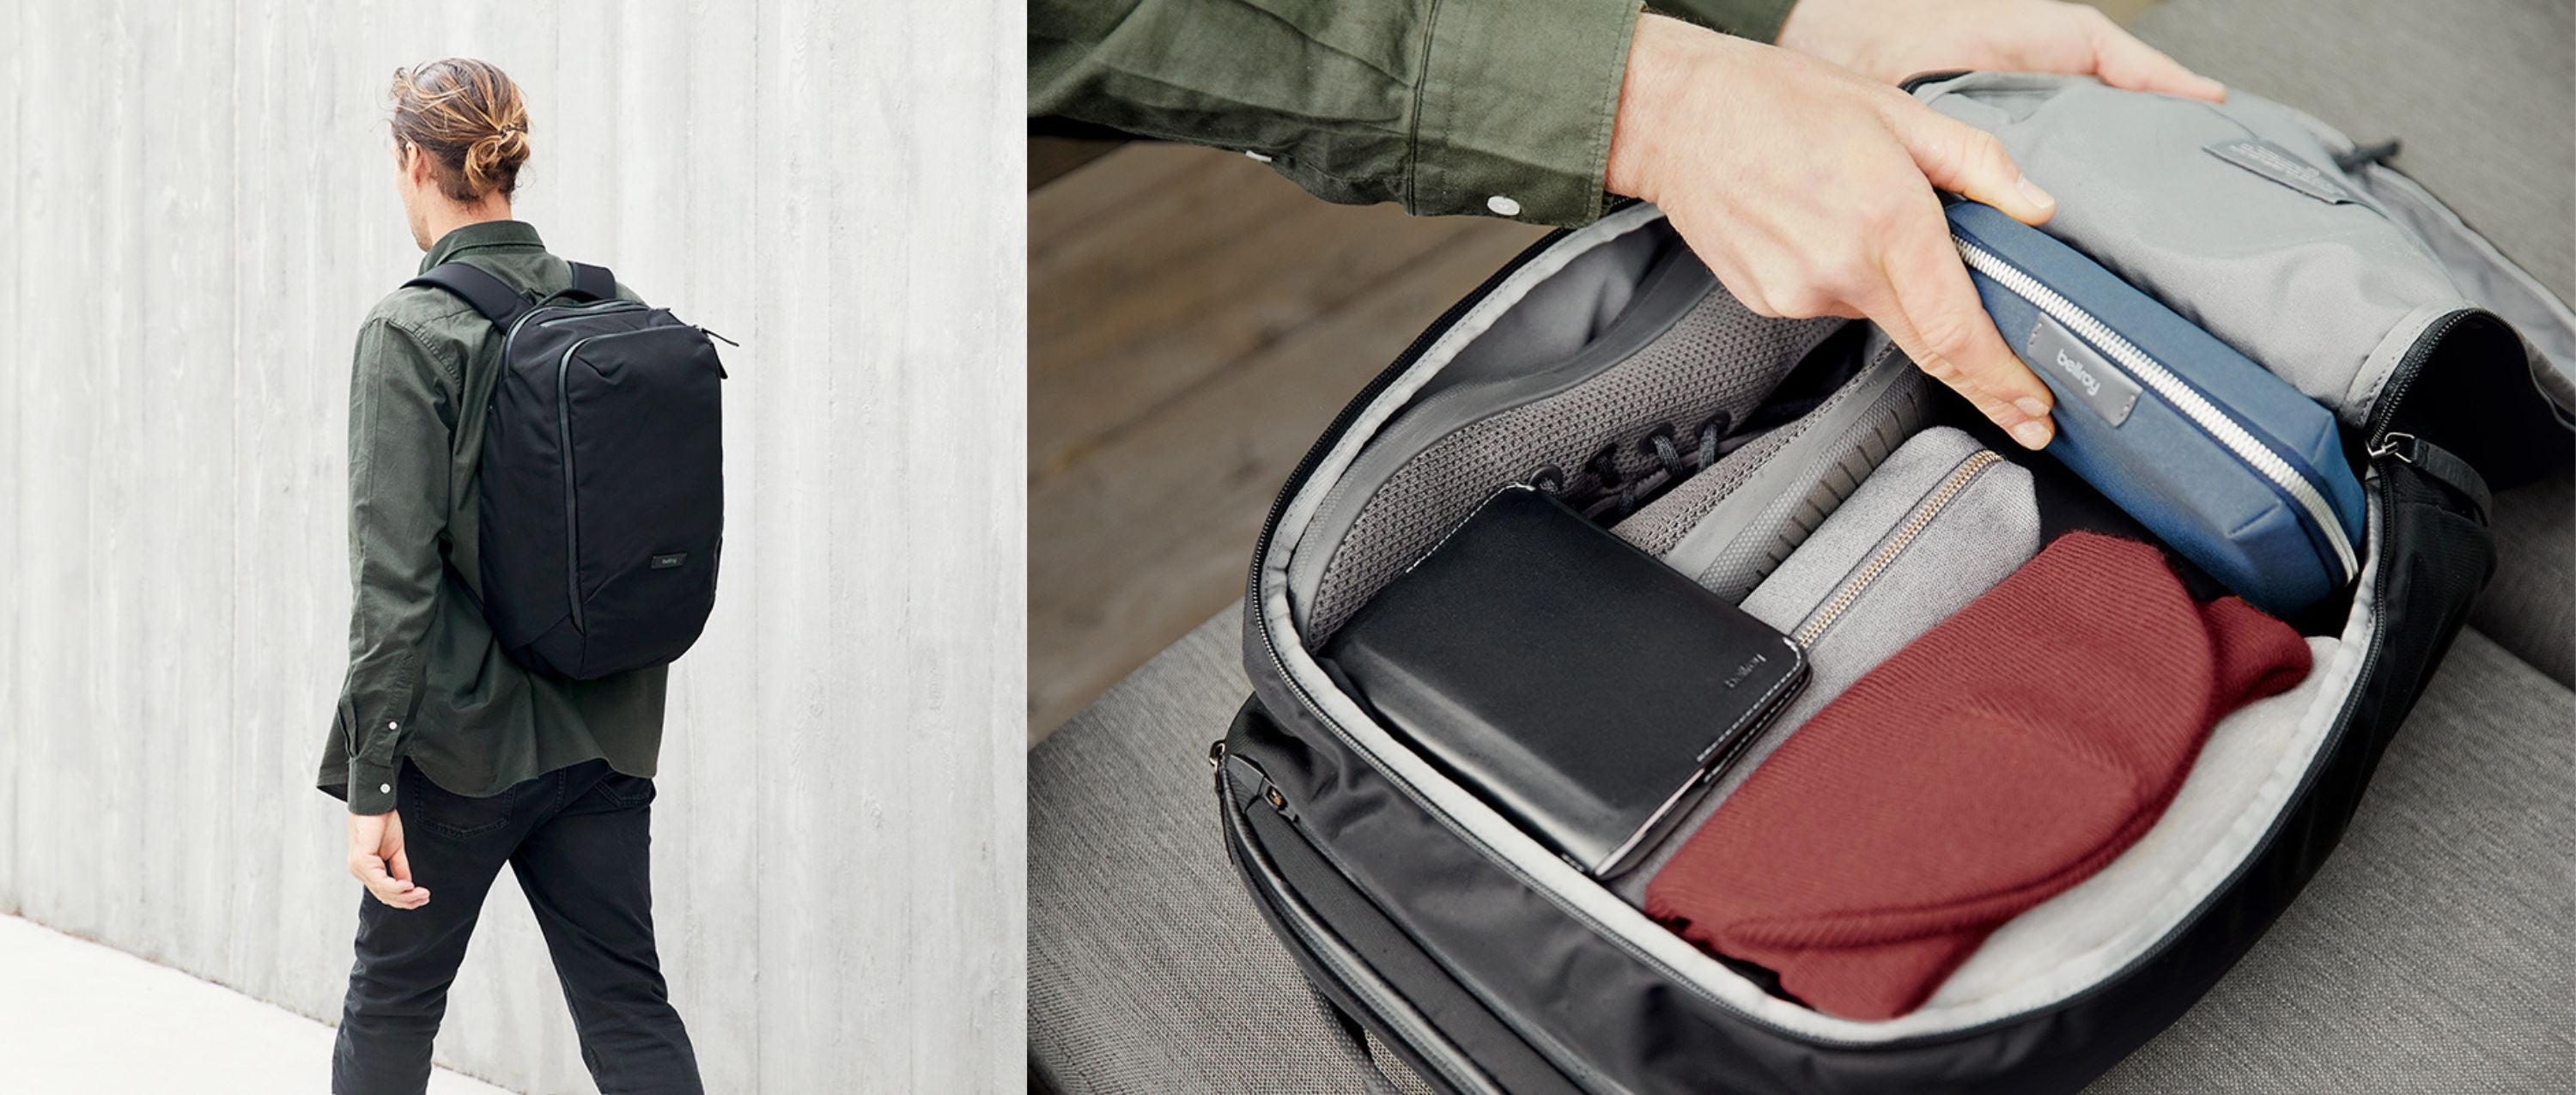 Bellroy Transit Workpack - en ideel rygsæk til hverdagen. Sublim organisering i et stilrent og minimalistisk design.